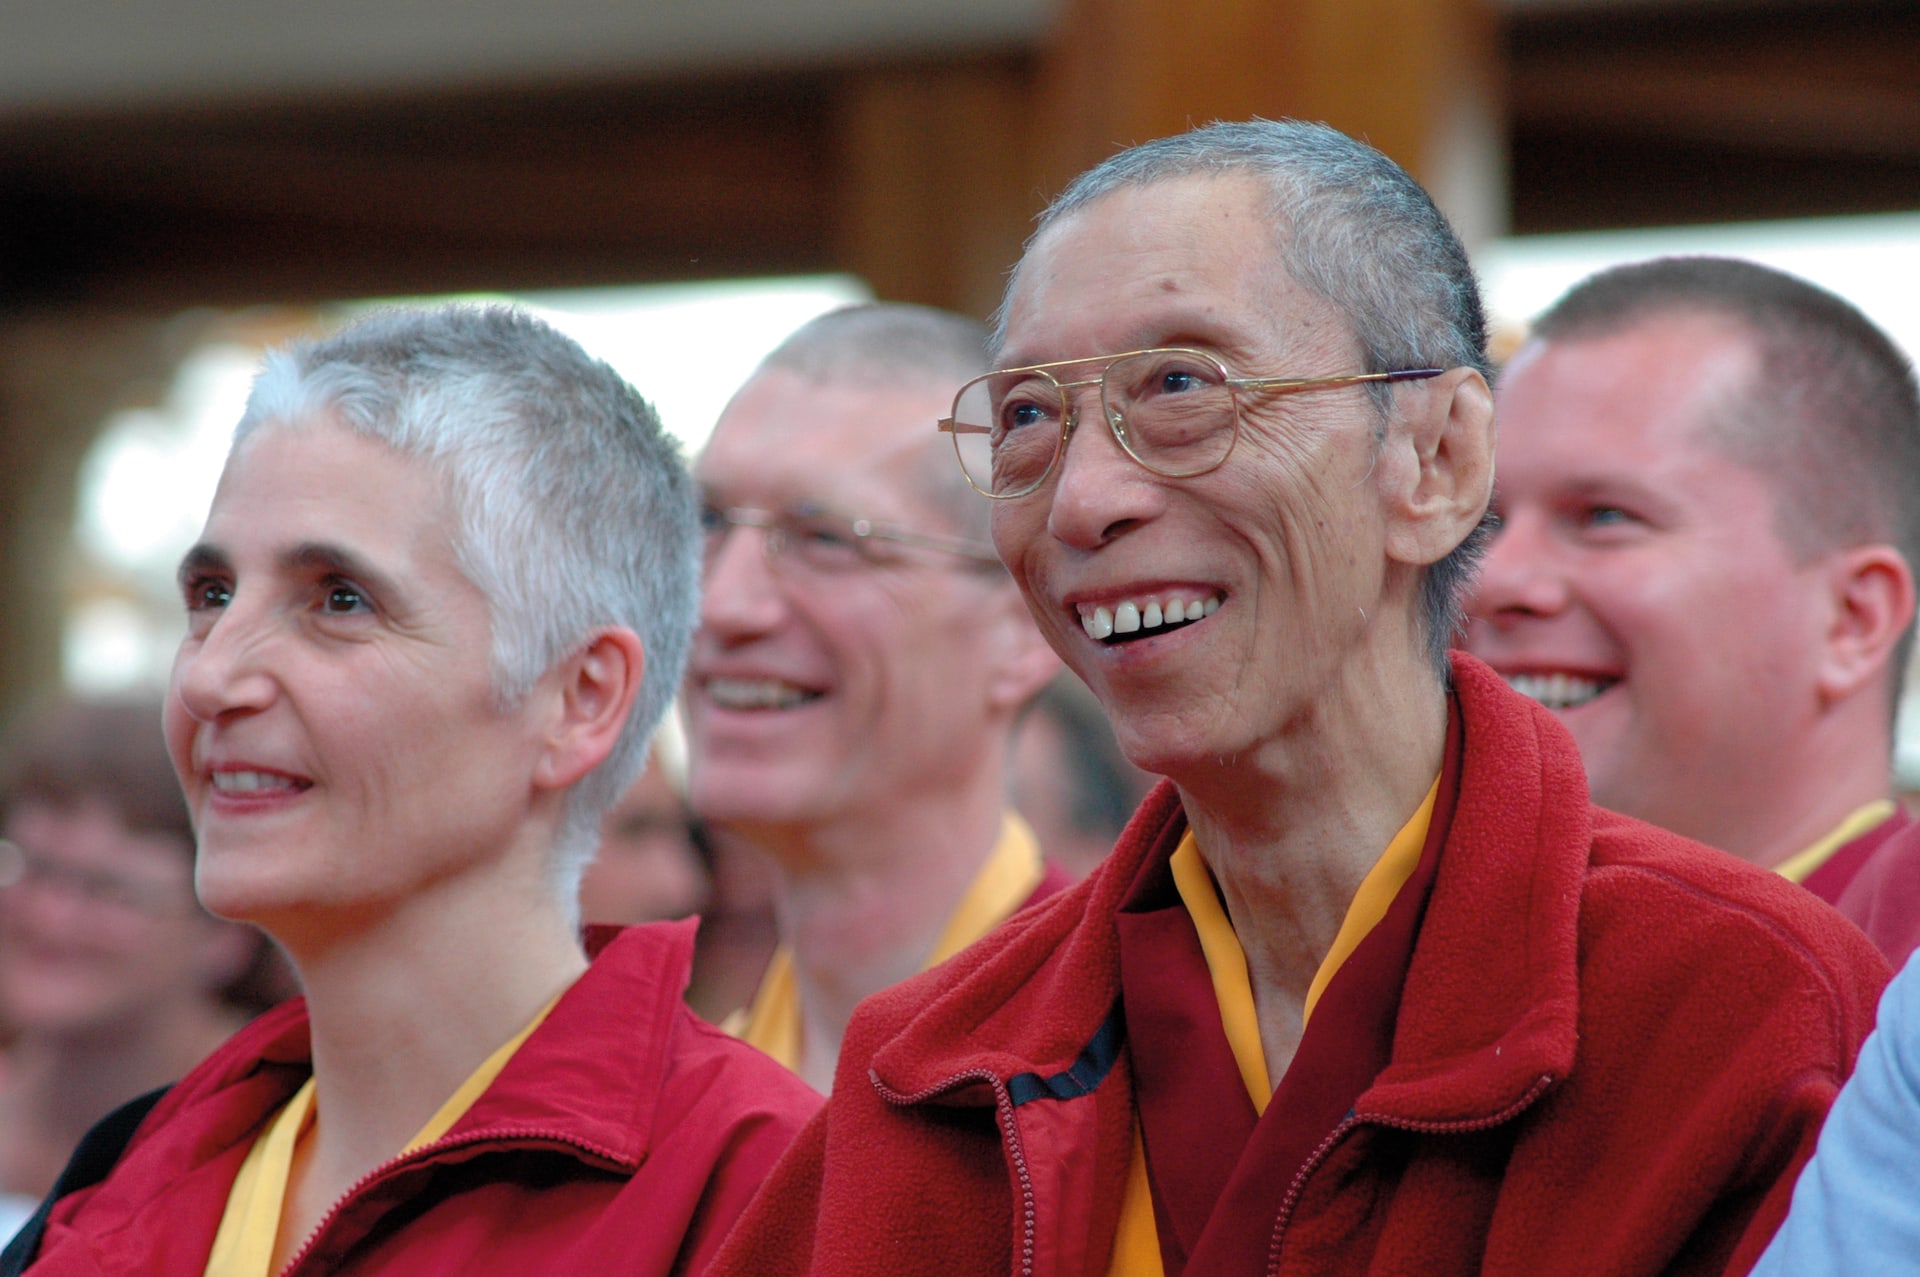 Venerable Geshe Kelsang Gyatso Rinpoche-laughing-play